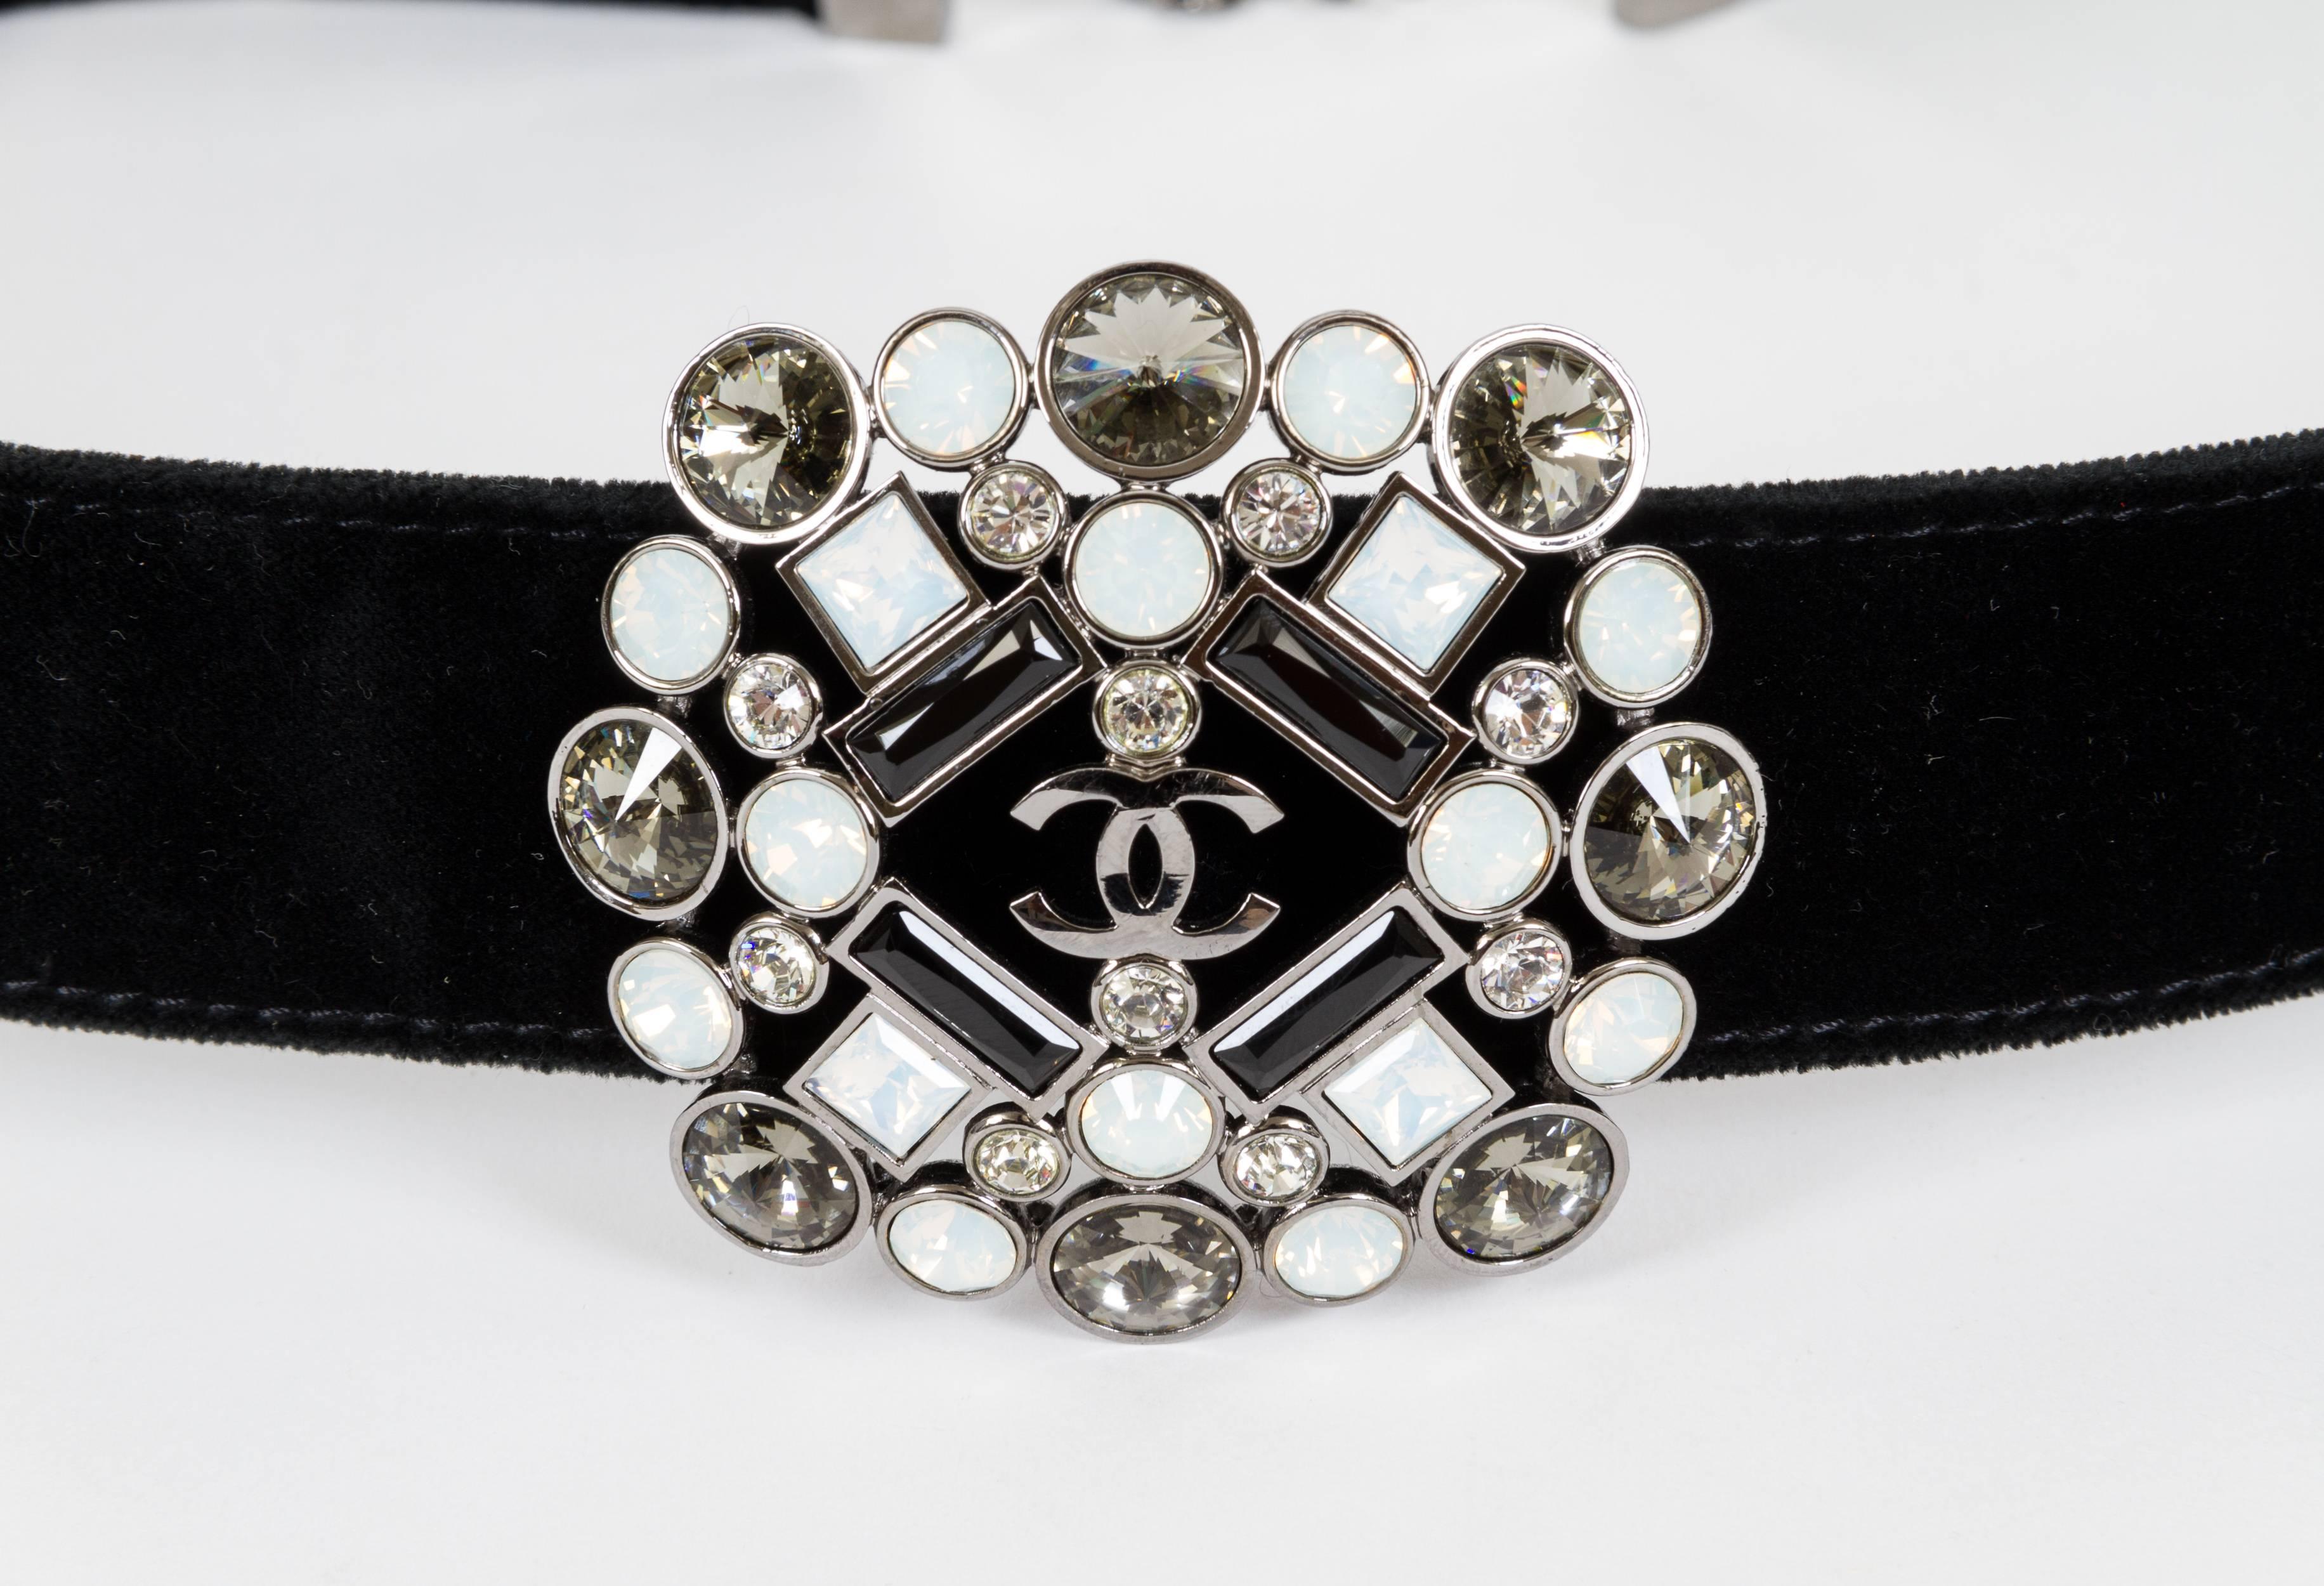 Chanel black velvet belt with jewel gripoix center piece. Autumn 2006 Collection. 35.5